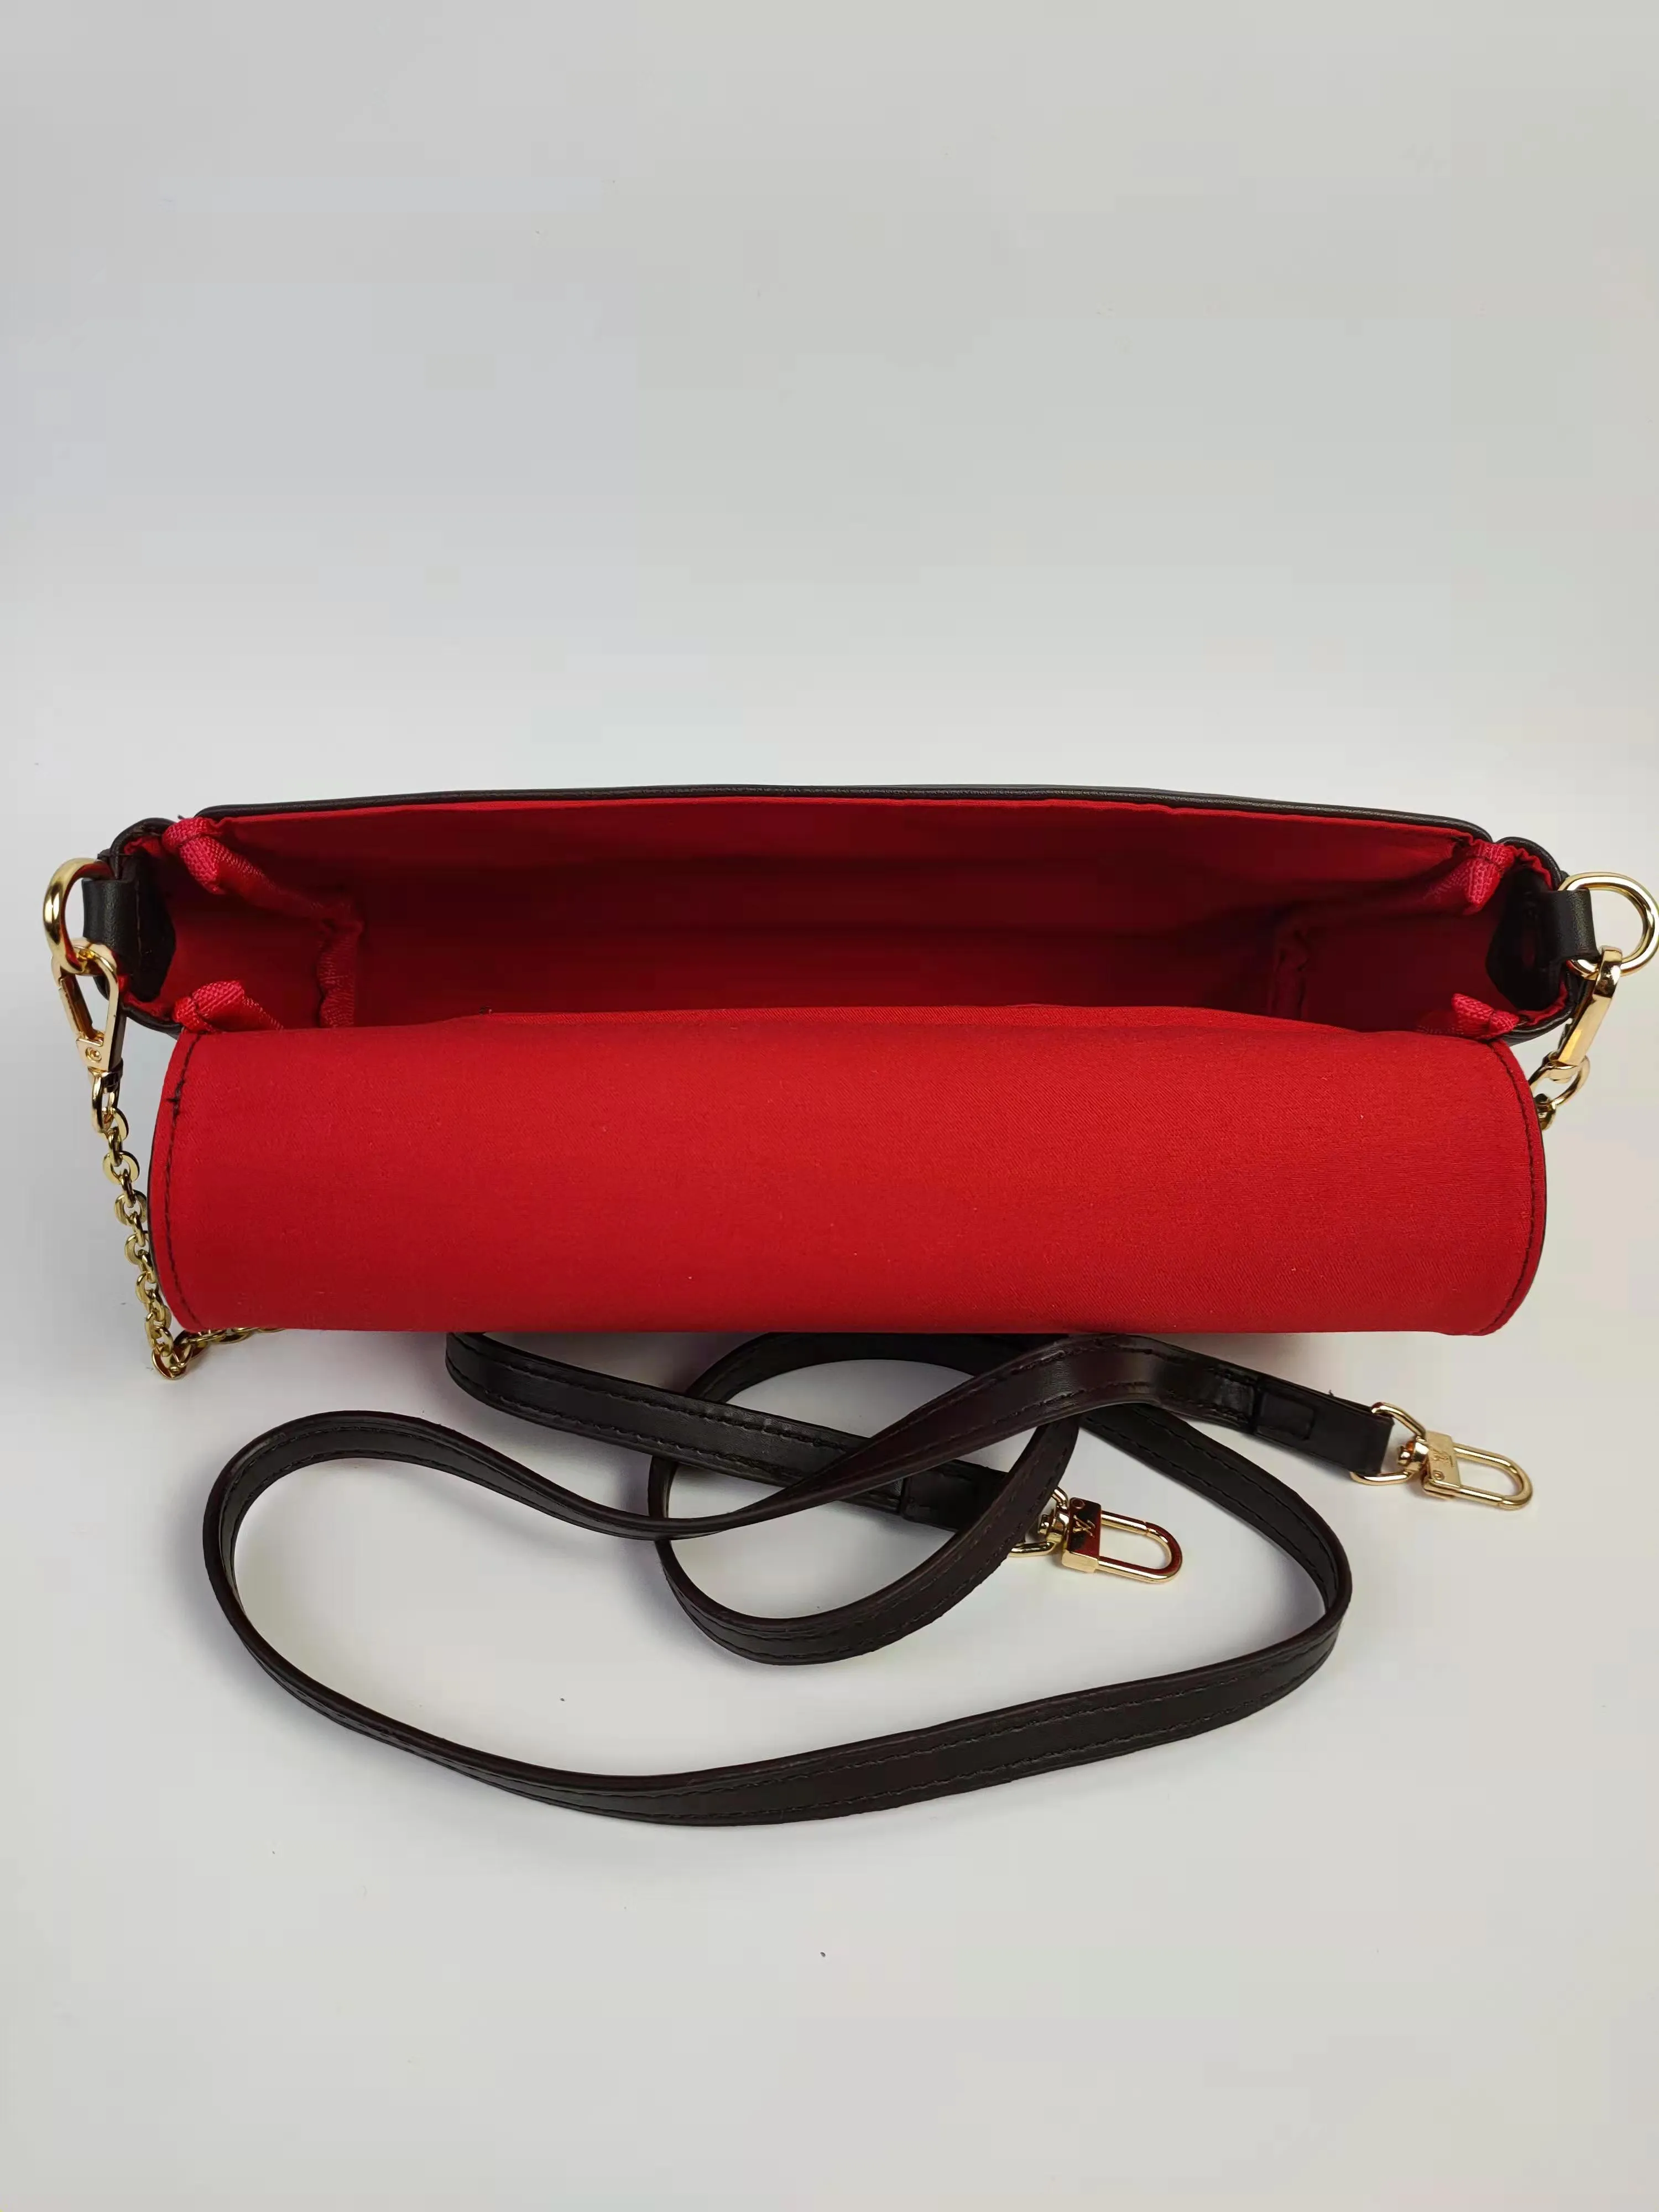 NOUVEAU Classic Fashion Women's Cotton Sac à main sac à main Crossbody Transhy Travel Wallet Bag237h